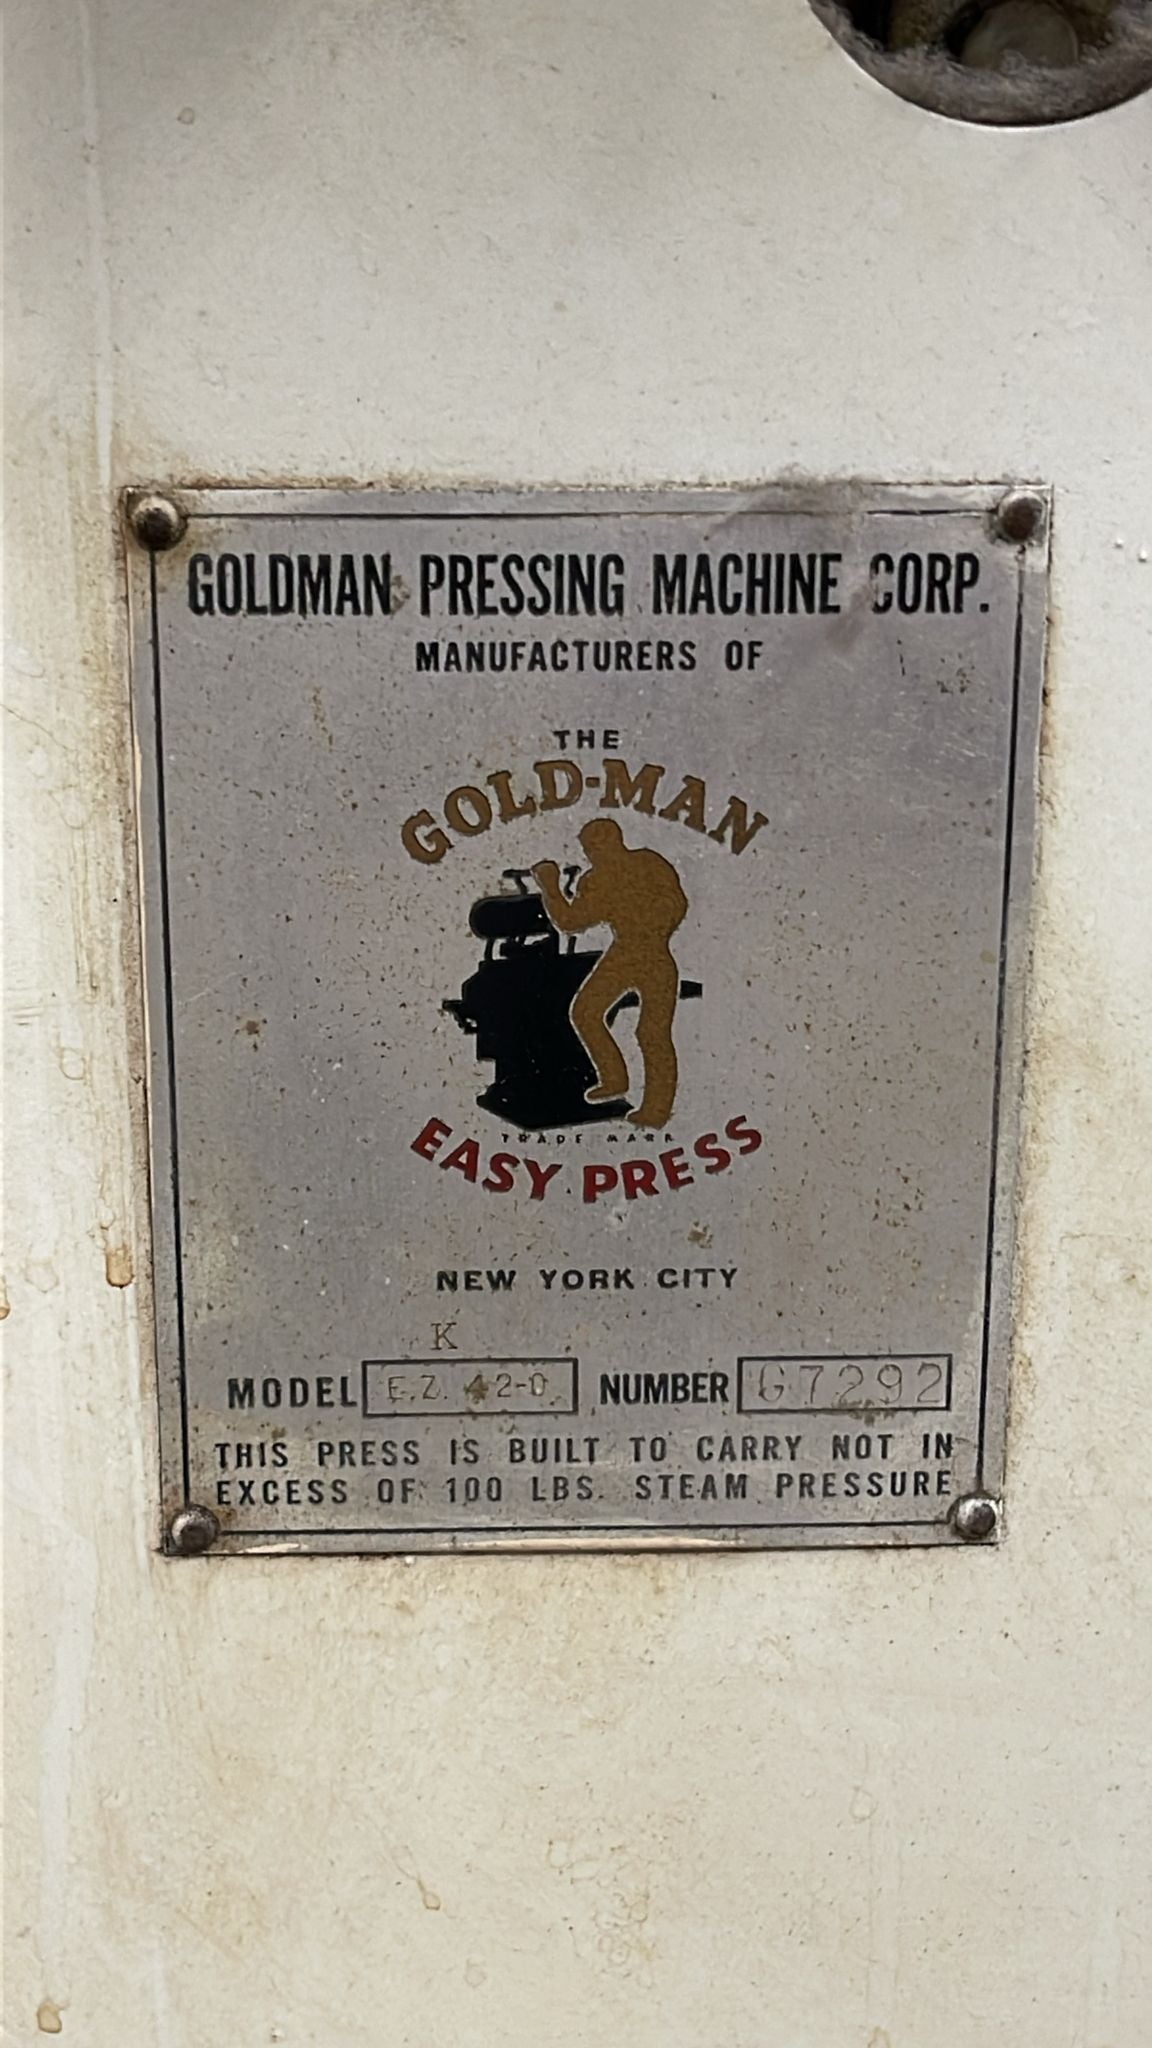 The Goldman Easy Press Model EZ 420 Dry Cleaning Machine Press